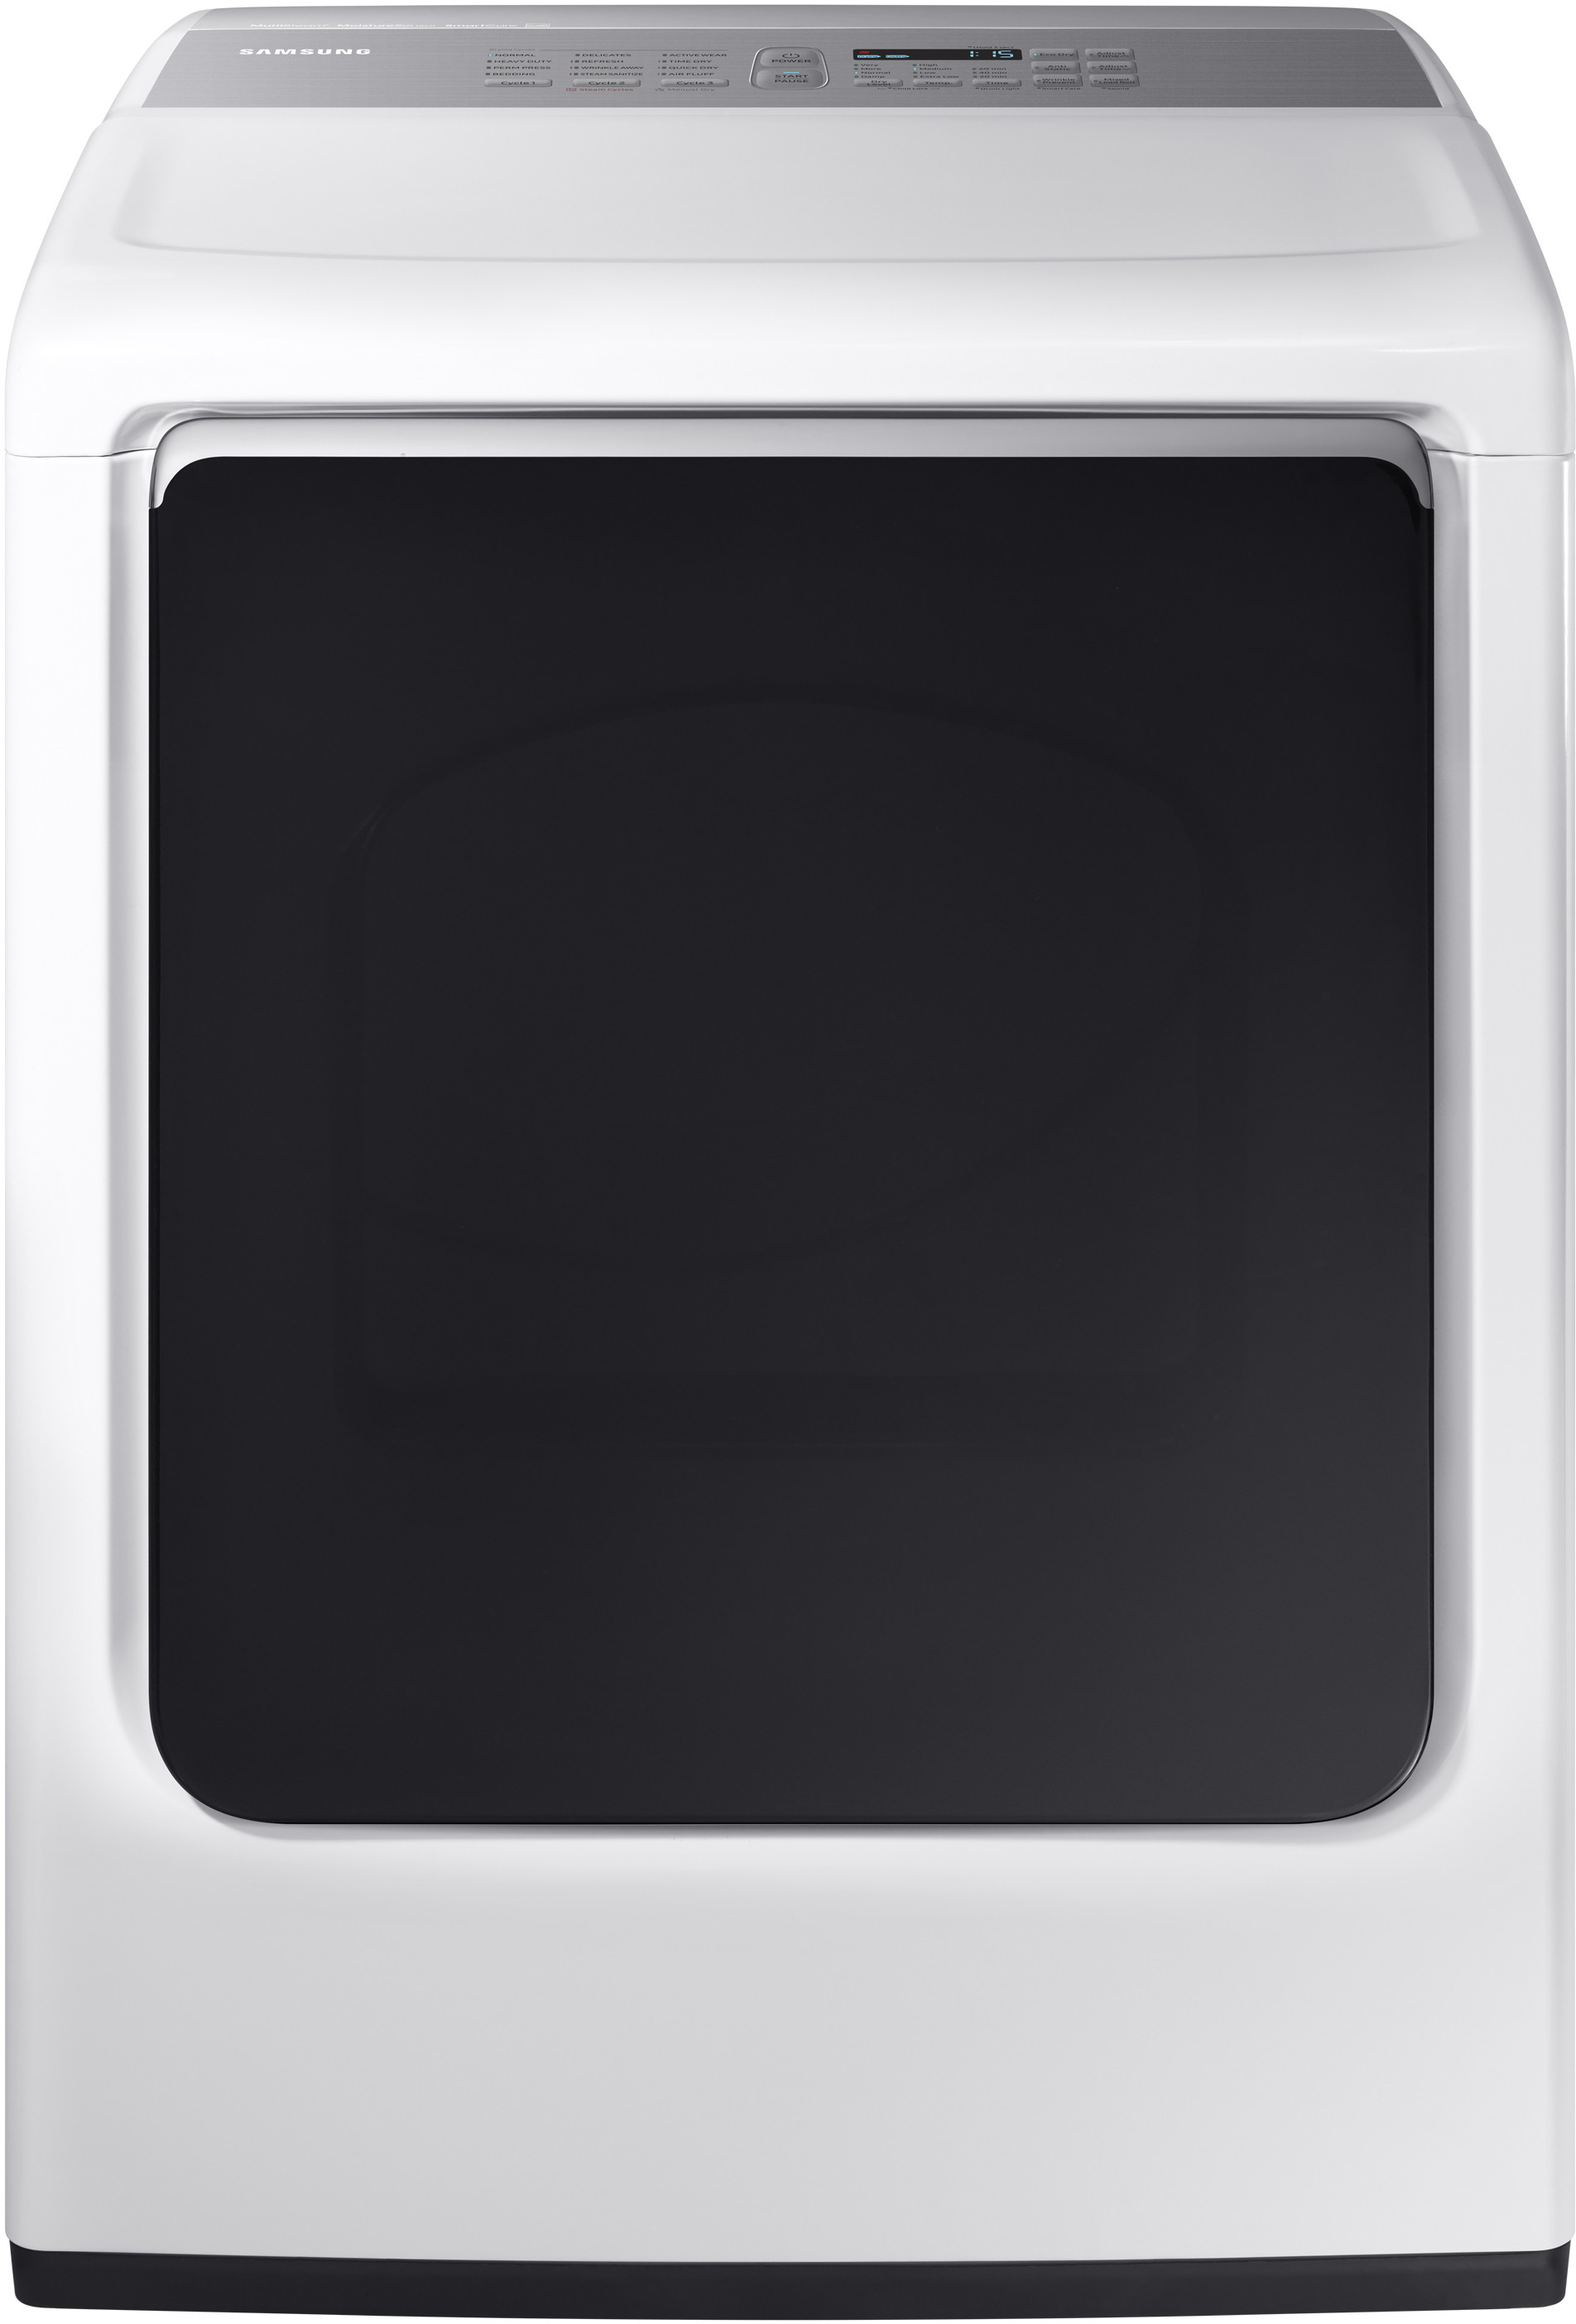 Samsung DVE52M8650W 27 Inch Electric Dryer with Multi-Steam™, Sensor